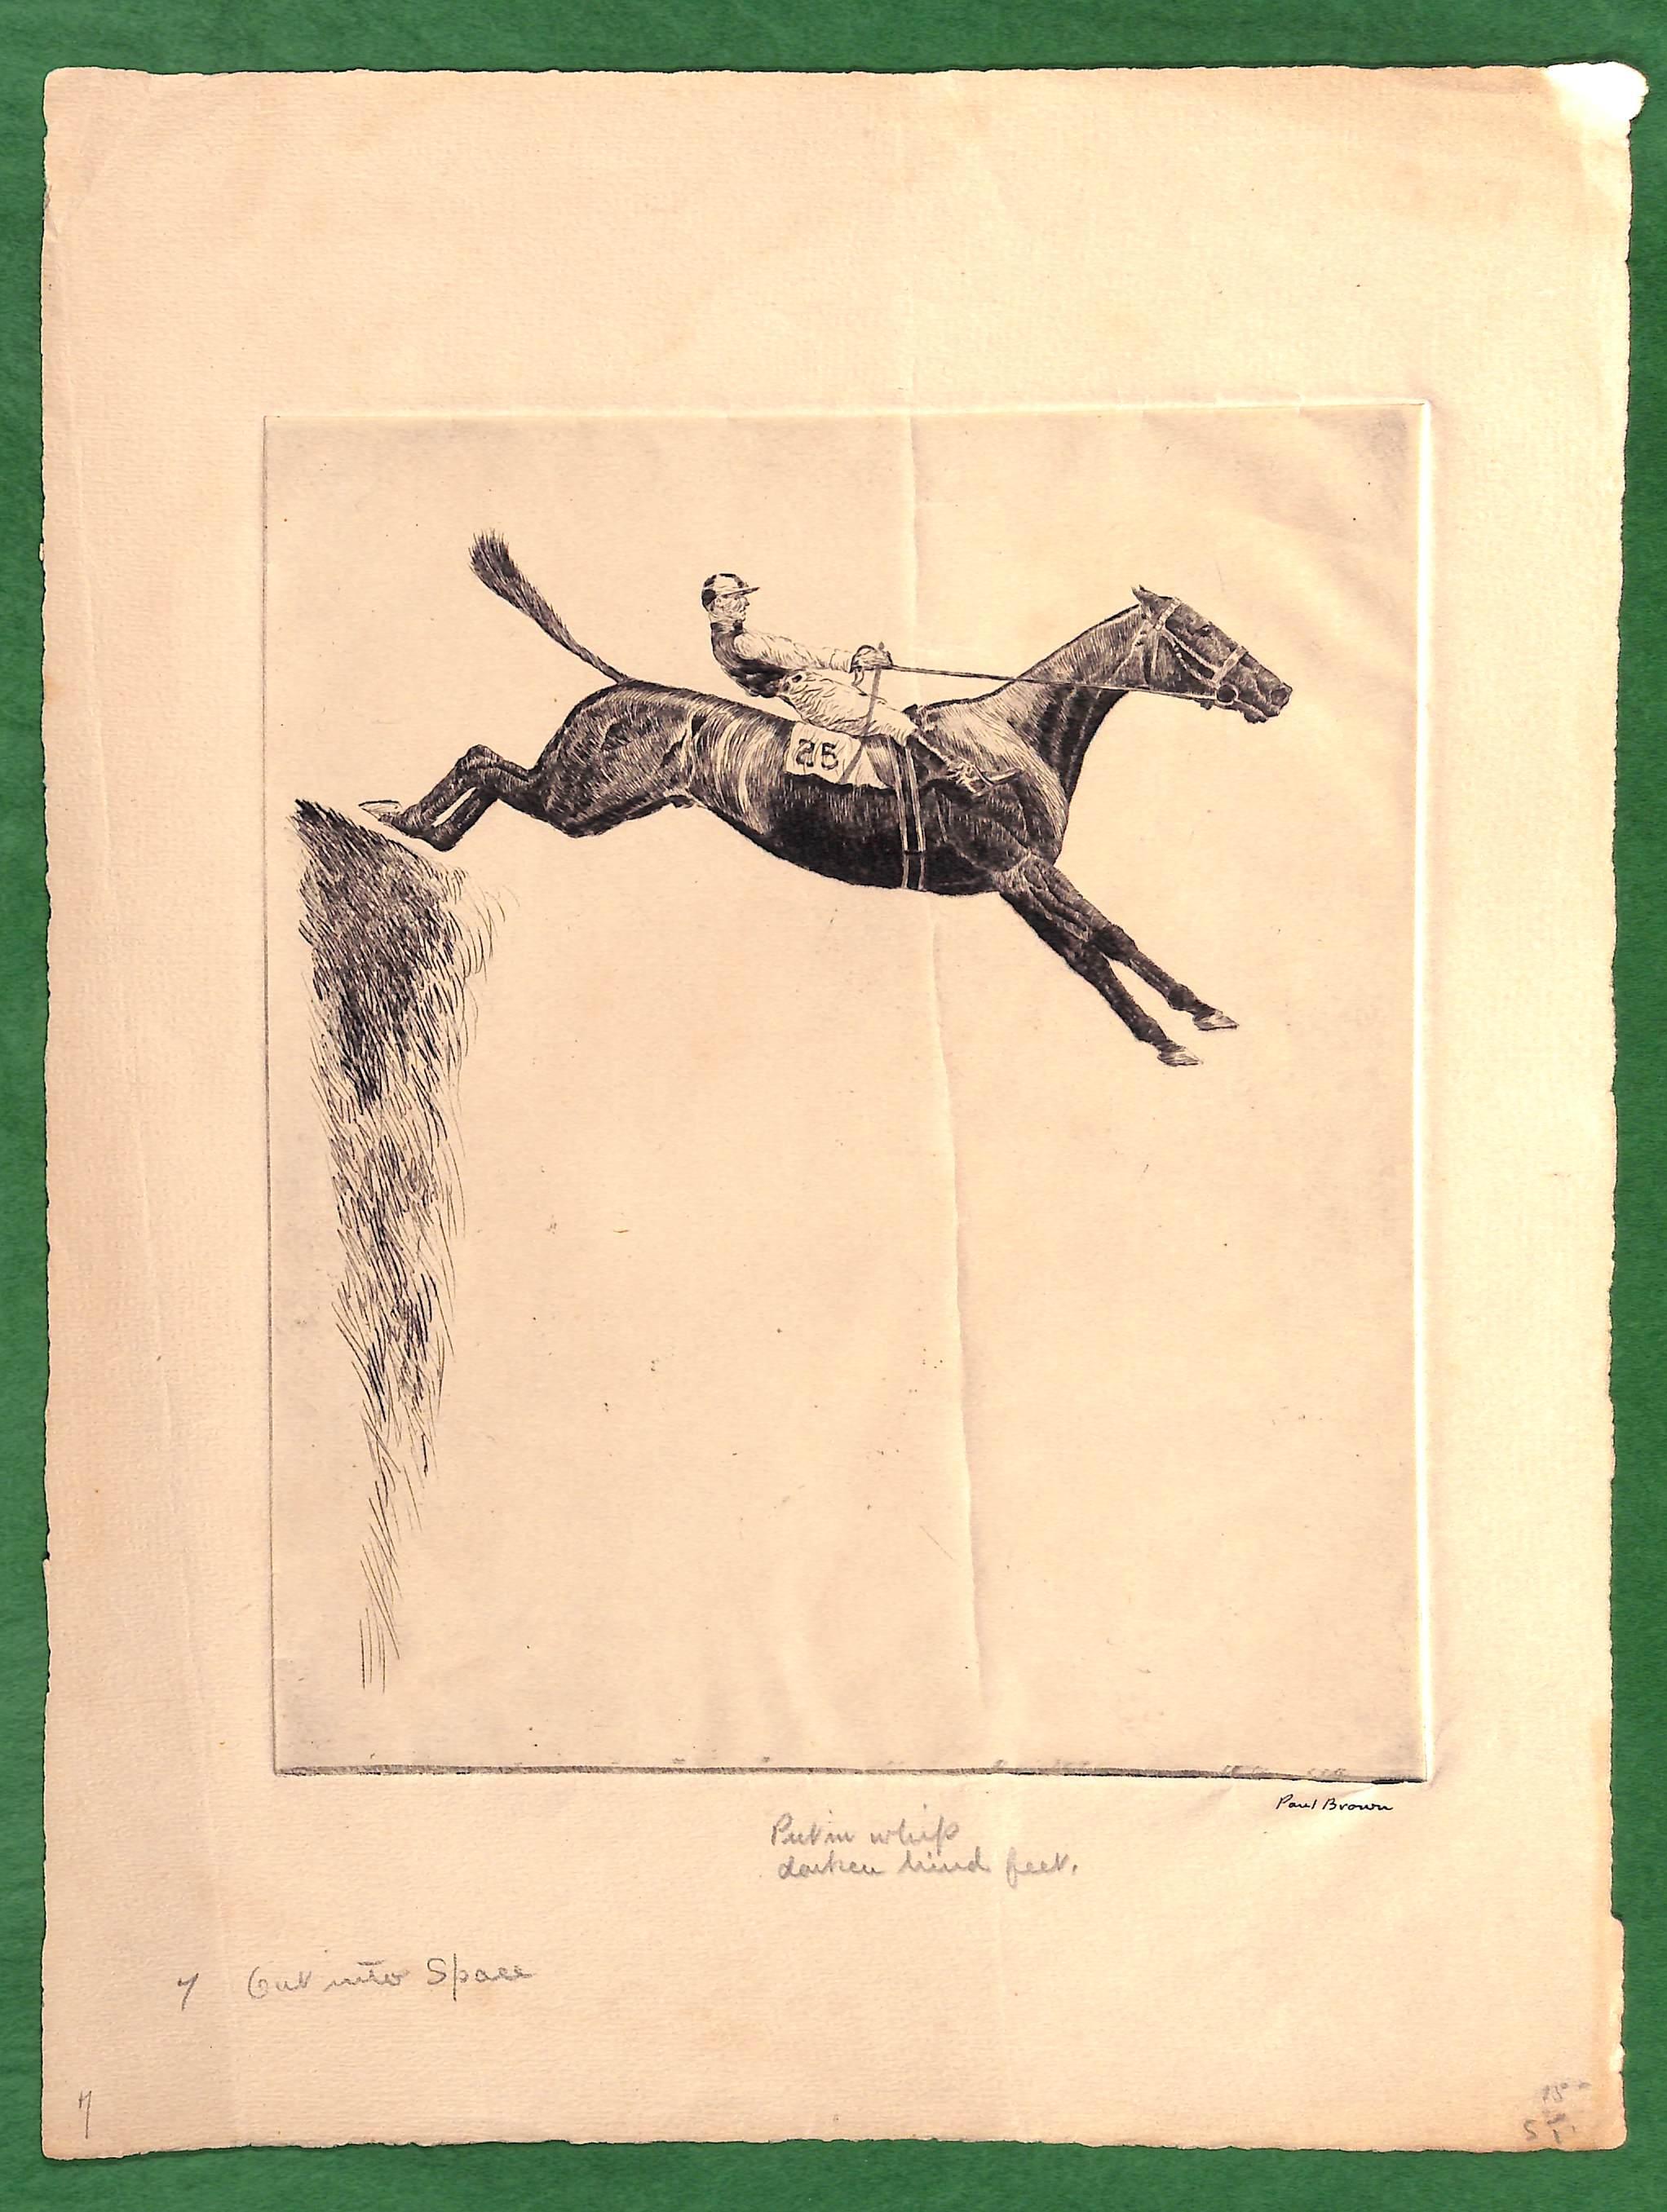 Paul Desmond Brown Animal Art – Paul Brown "Out Into Space" Steeplechaser Kaltnadelradierung